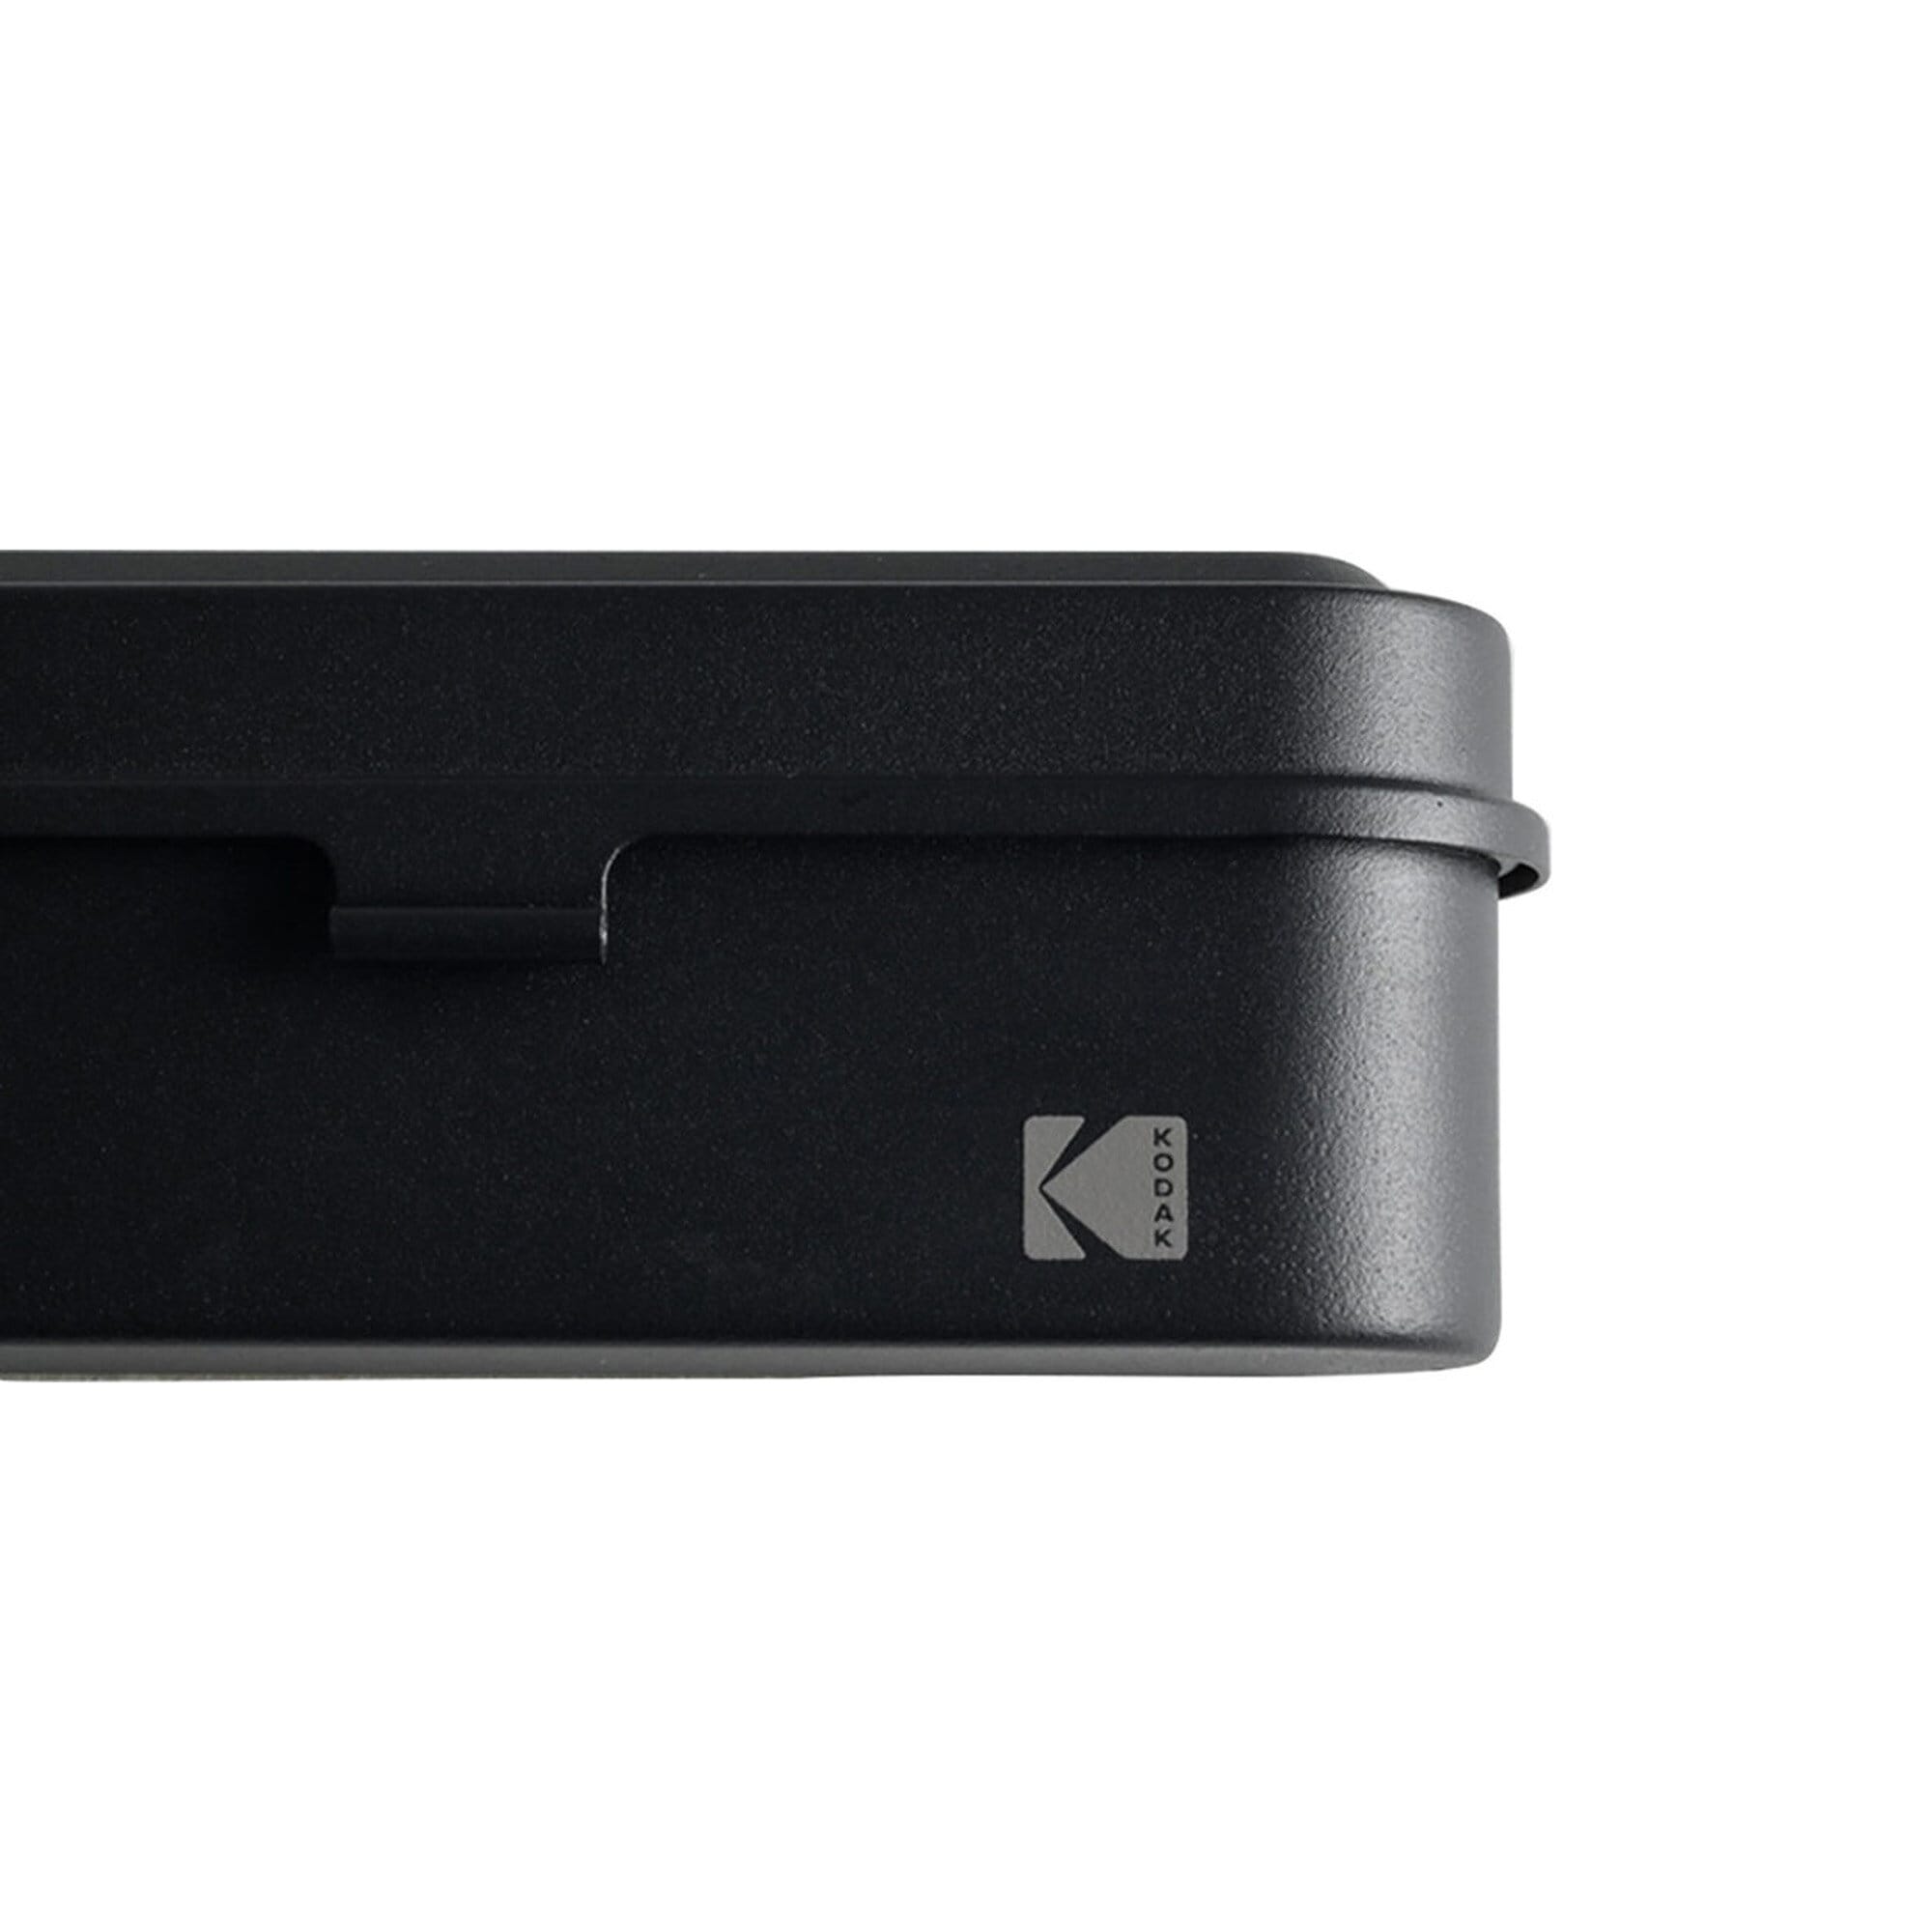 Kodak Film Steel Case Black 135